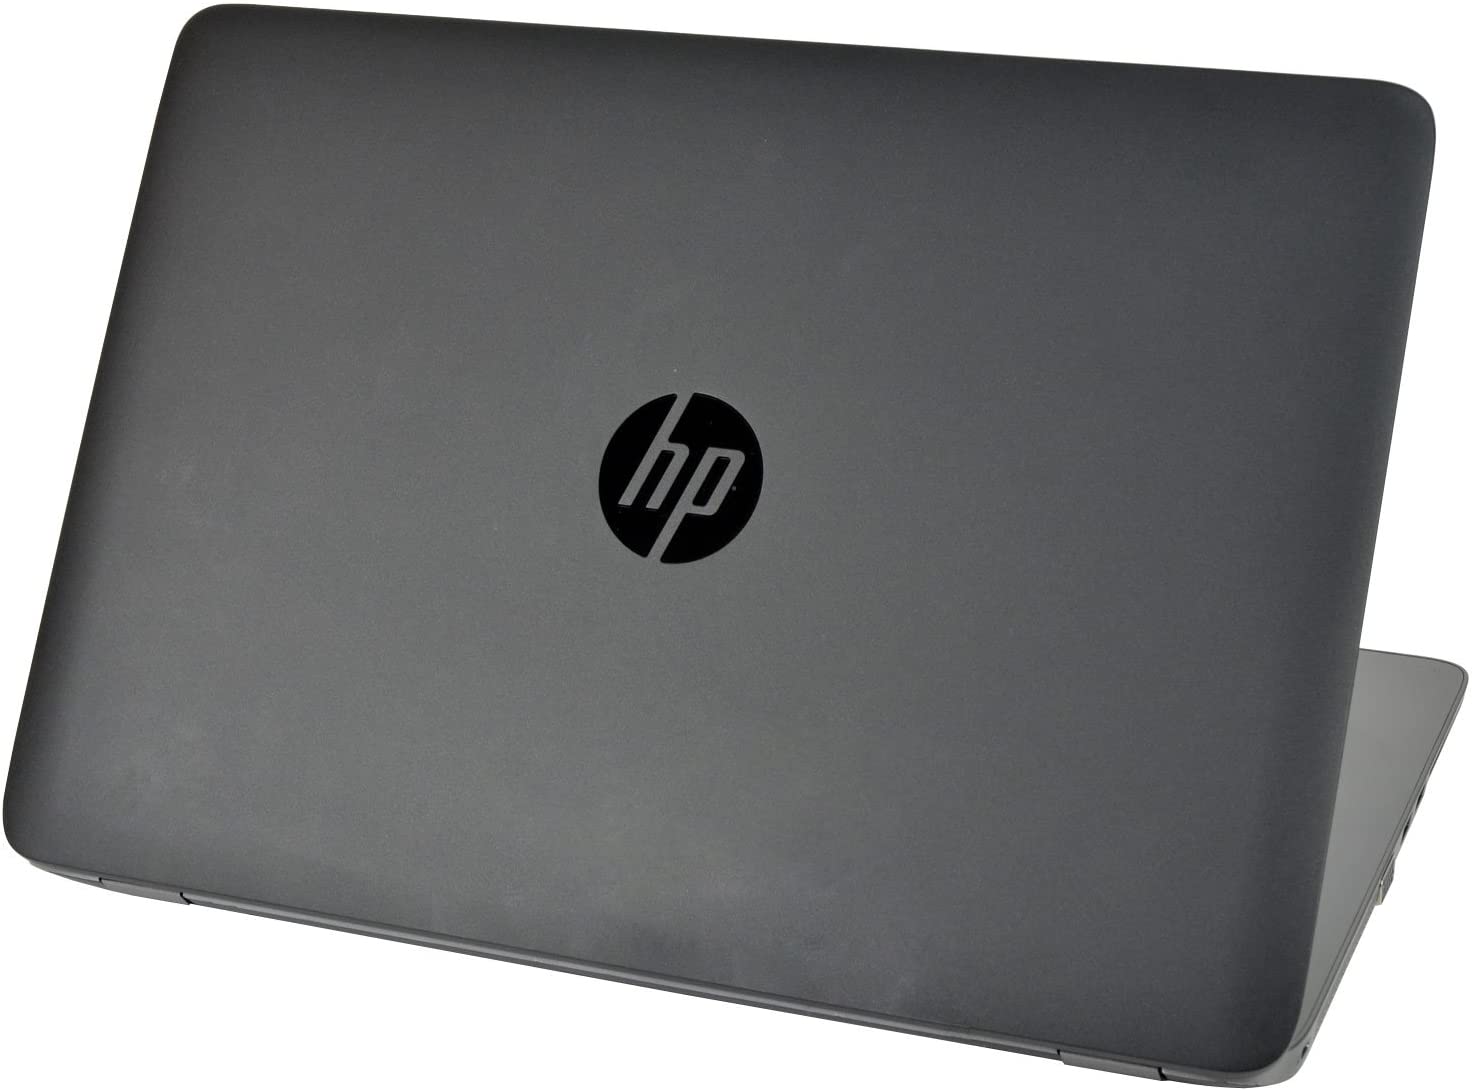 Refurbished HP EliteBook 840 G2 14in Laptop (Intel Core i5-5300U 2.3GHz/8GB Ram/128GB SSD/Windows 10 Pro 64bit)